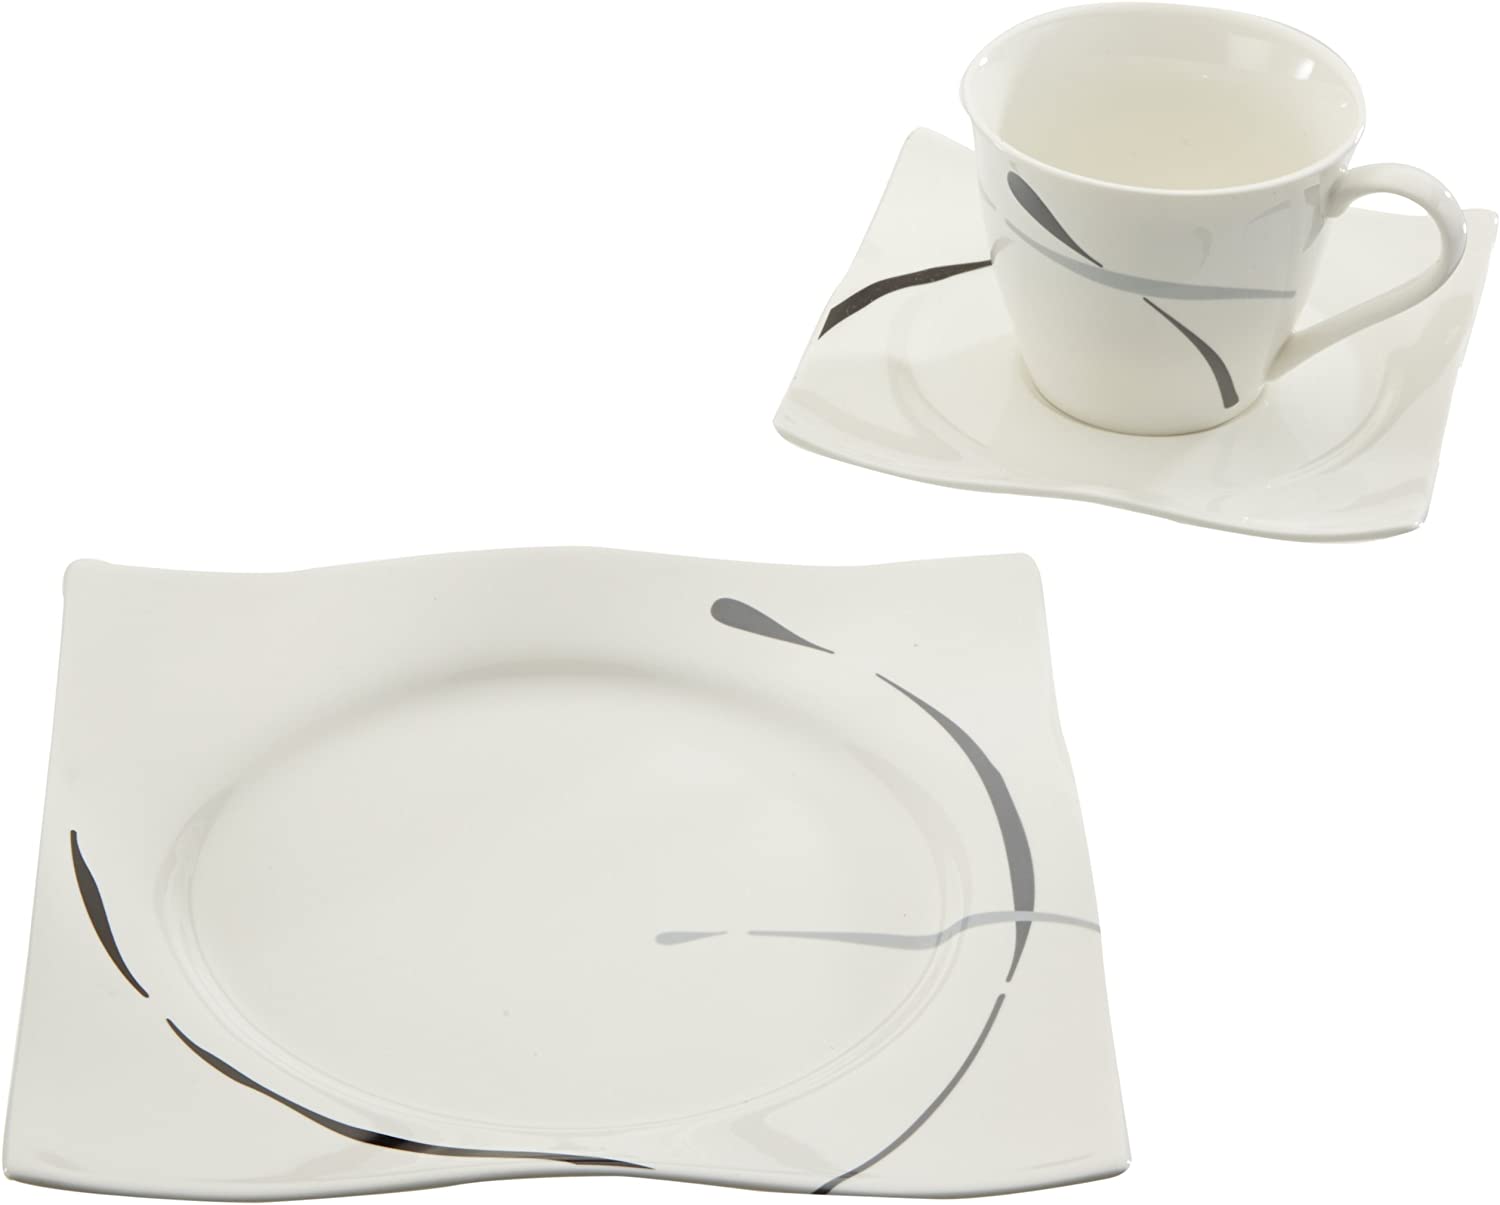 Ritzenhoff & Breker Dacapo Coffee Tableware 18 Pieces, High Quality Porcelain, Dishwasher Safe, 582758